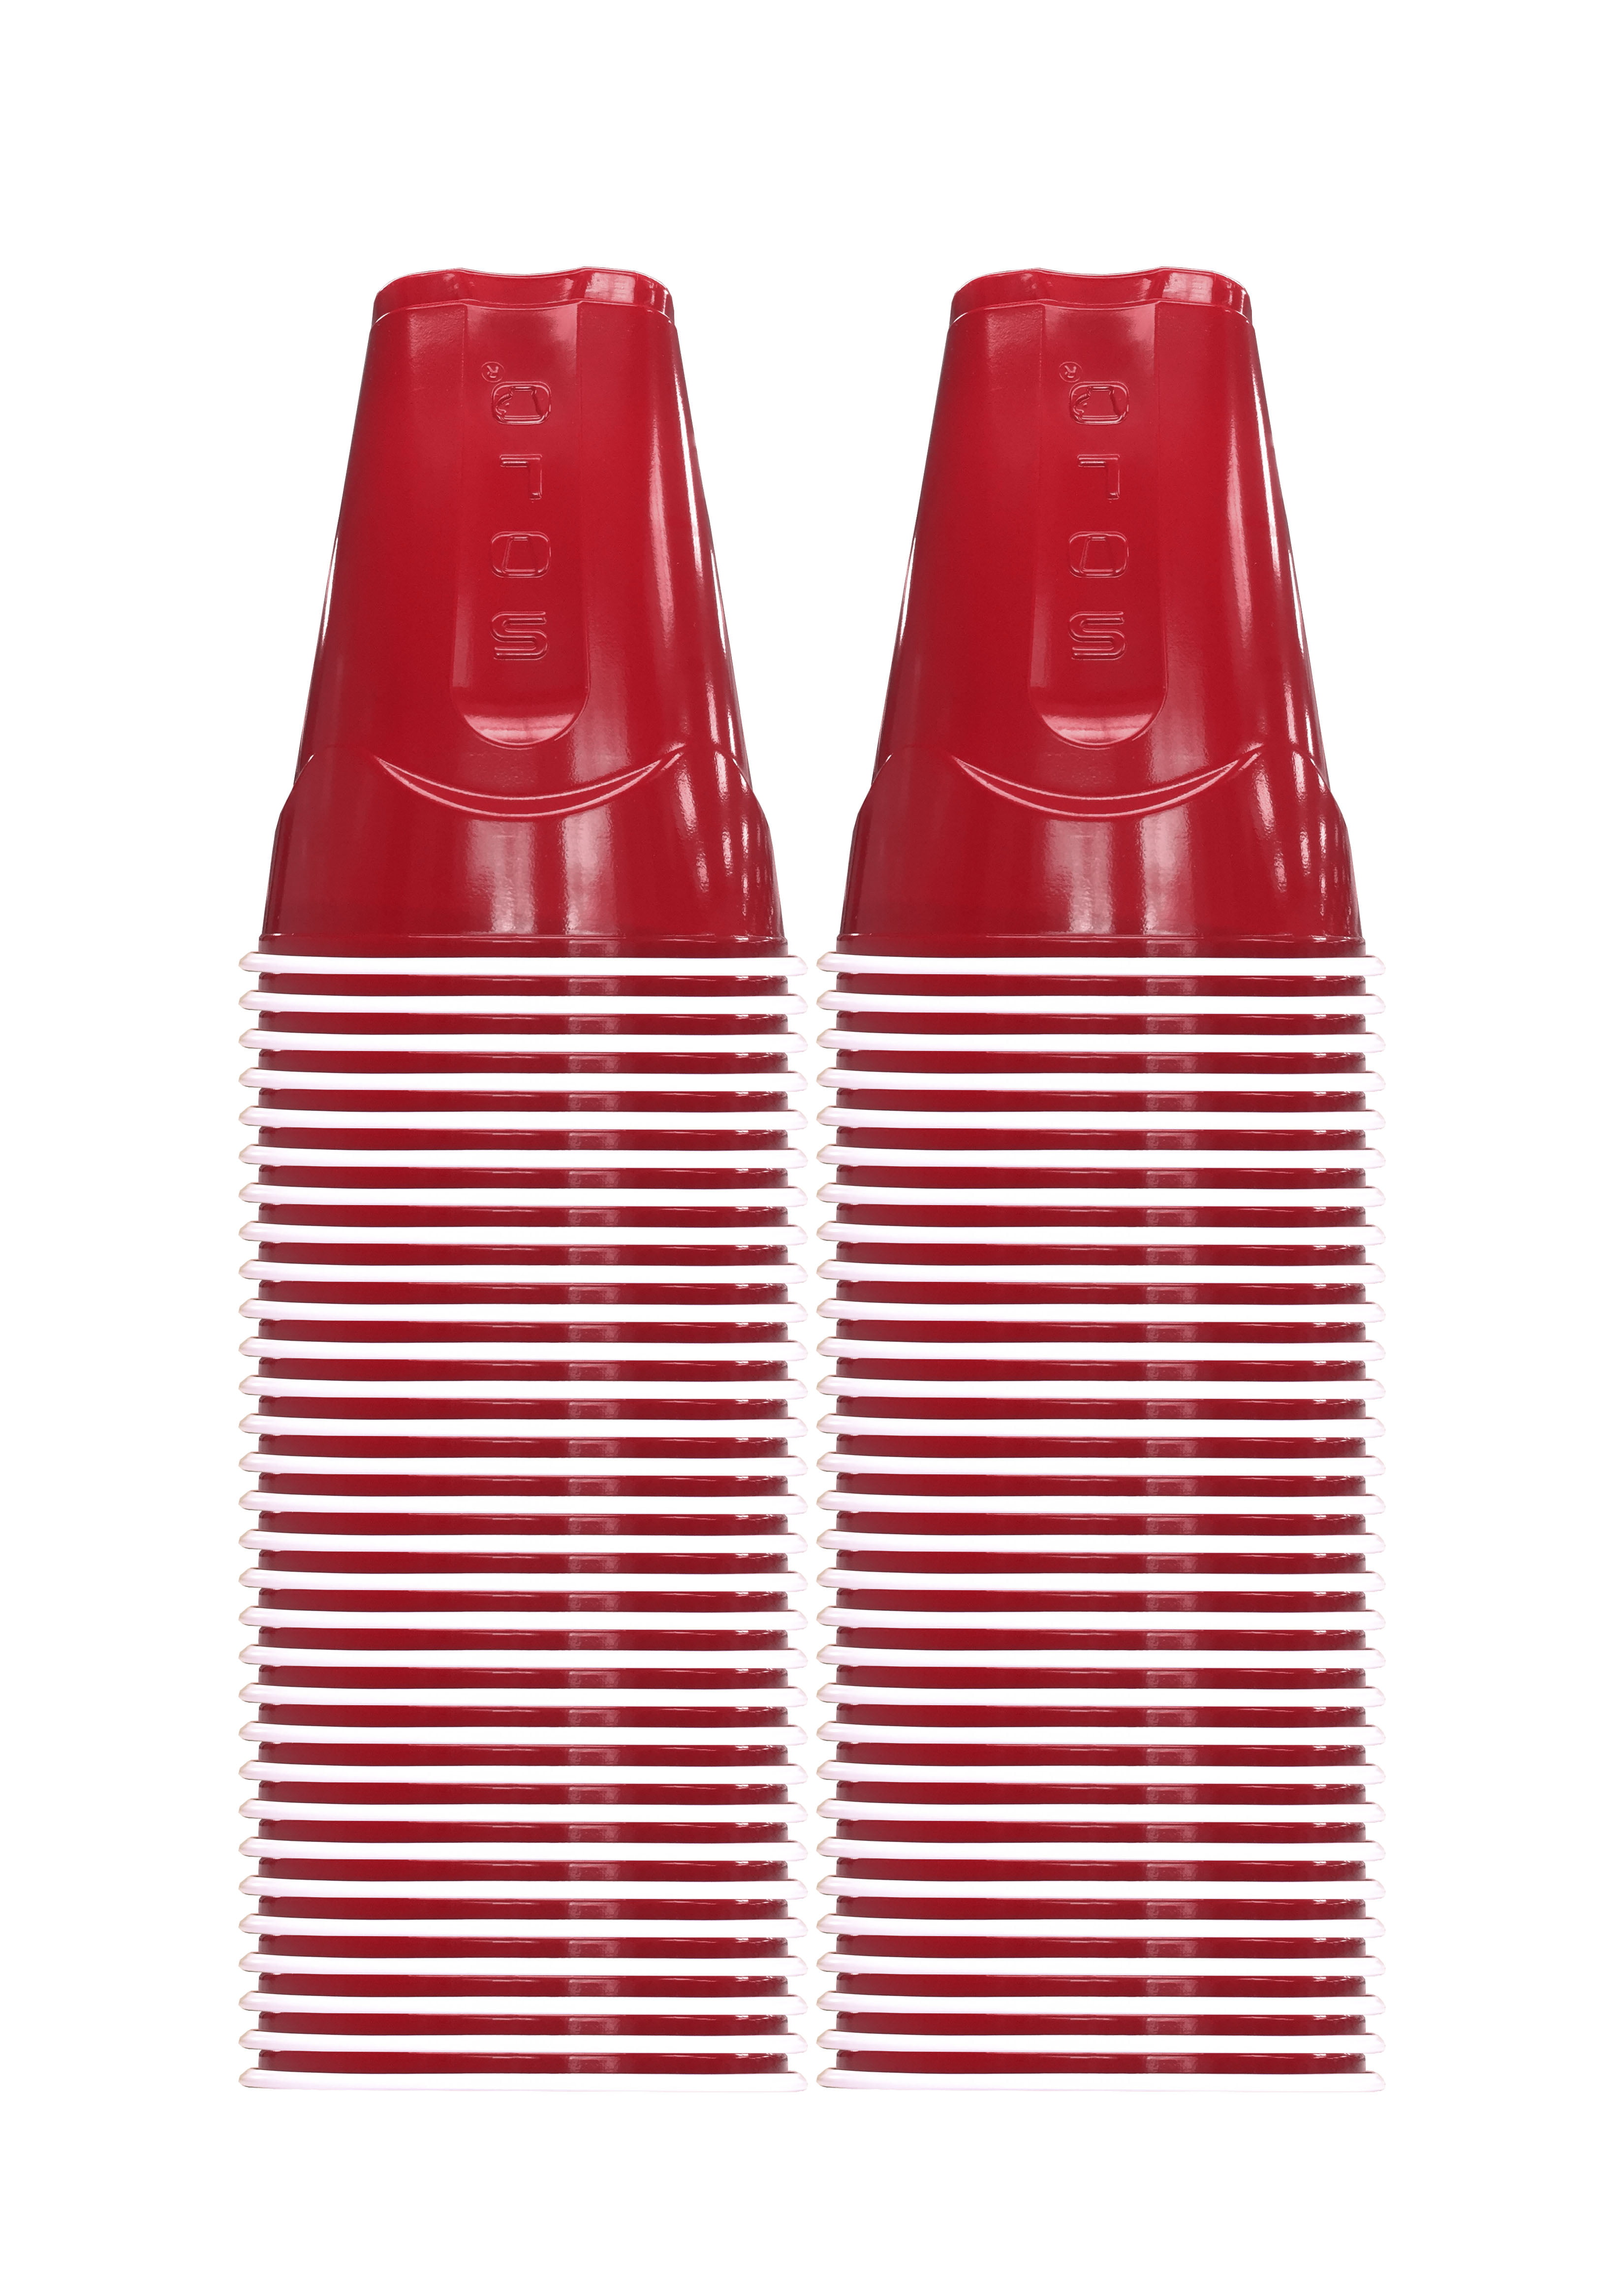 Member's Mark Heavy-Duty Red Cups (18 oz., 240 ct.) – Openbax